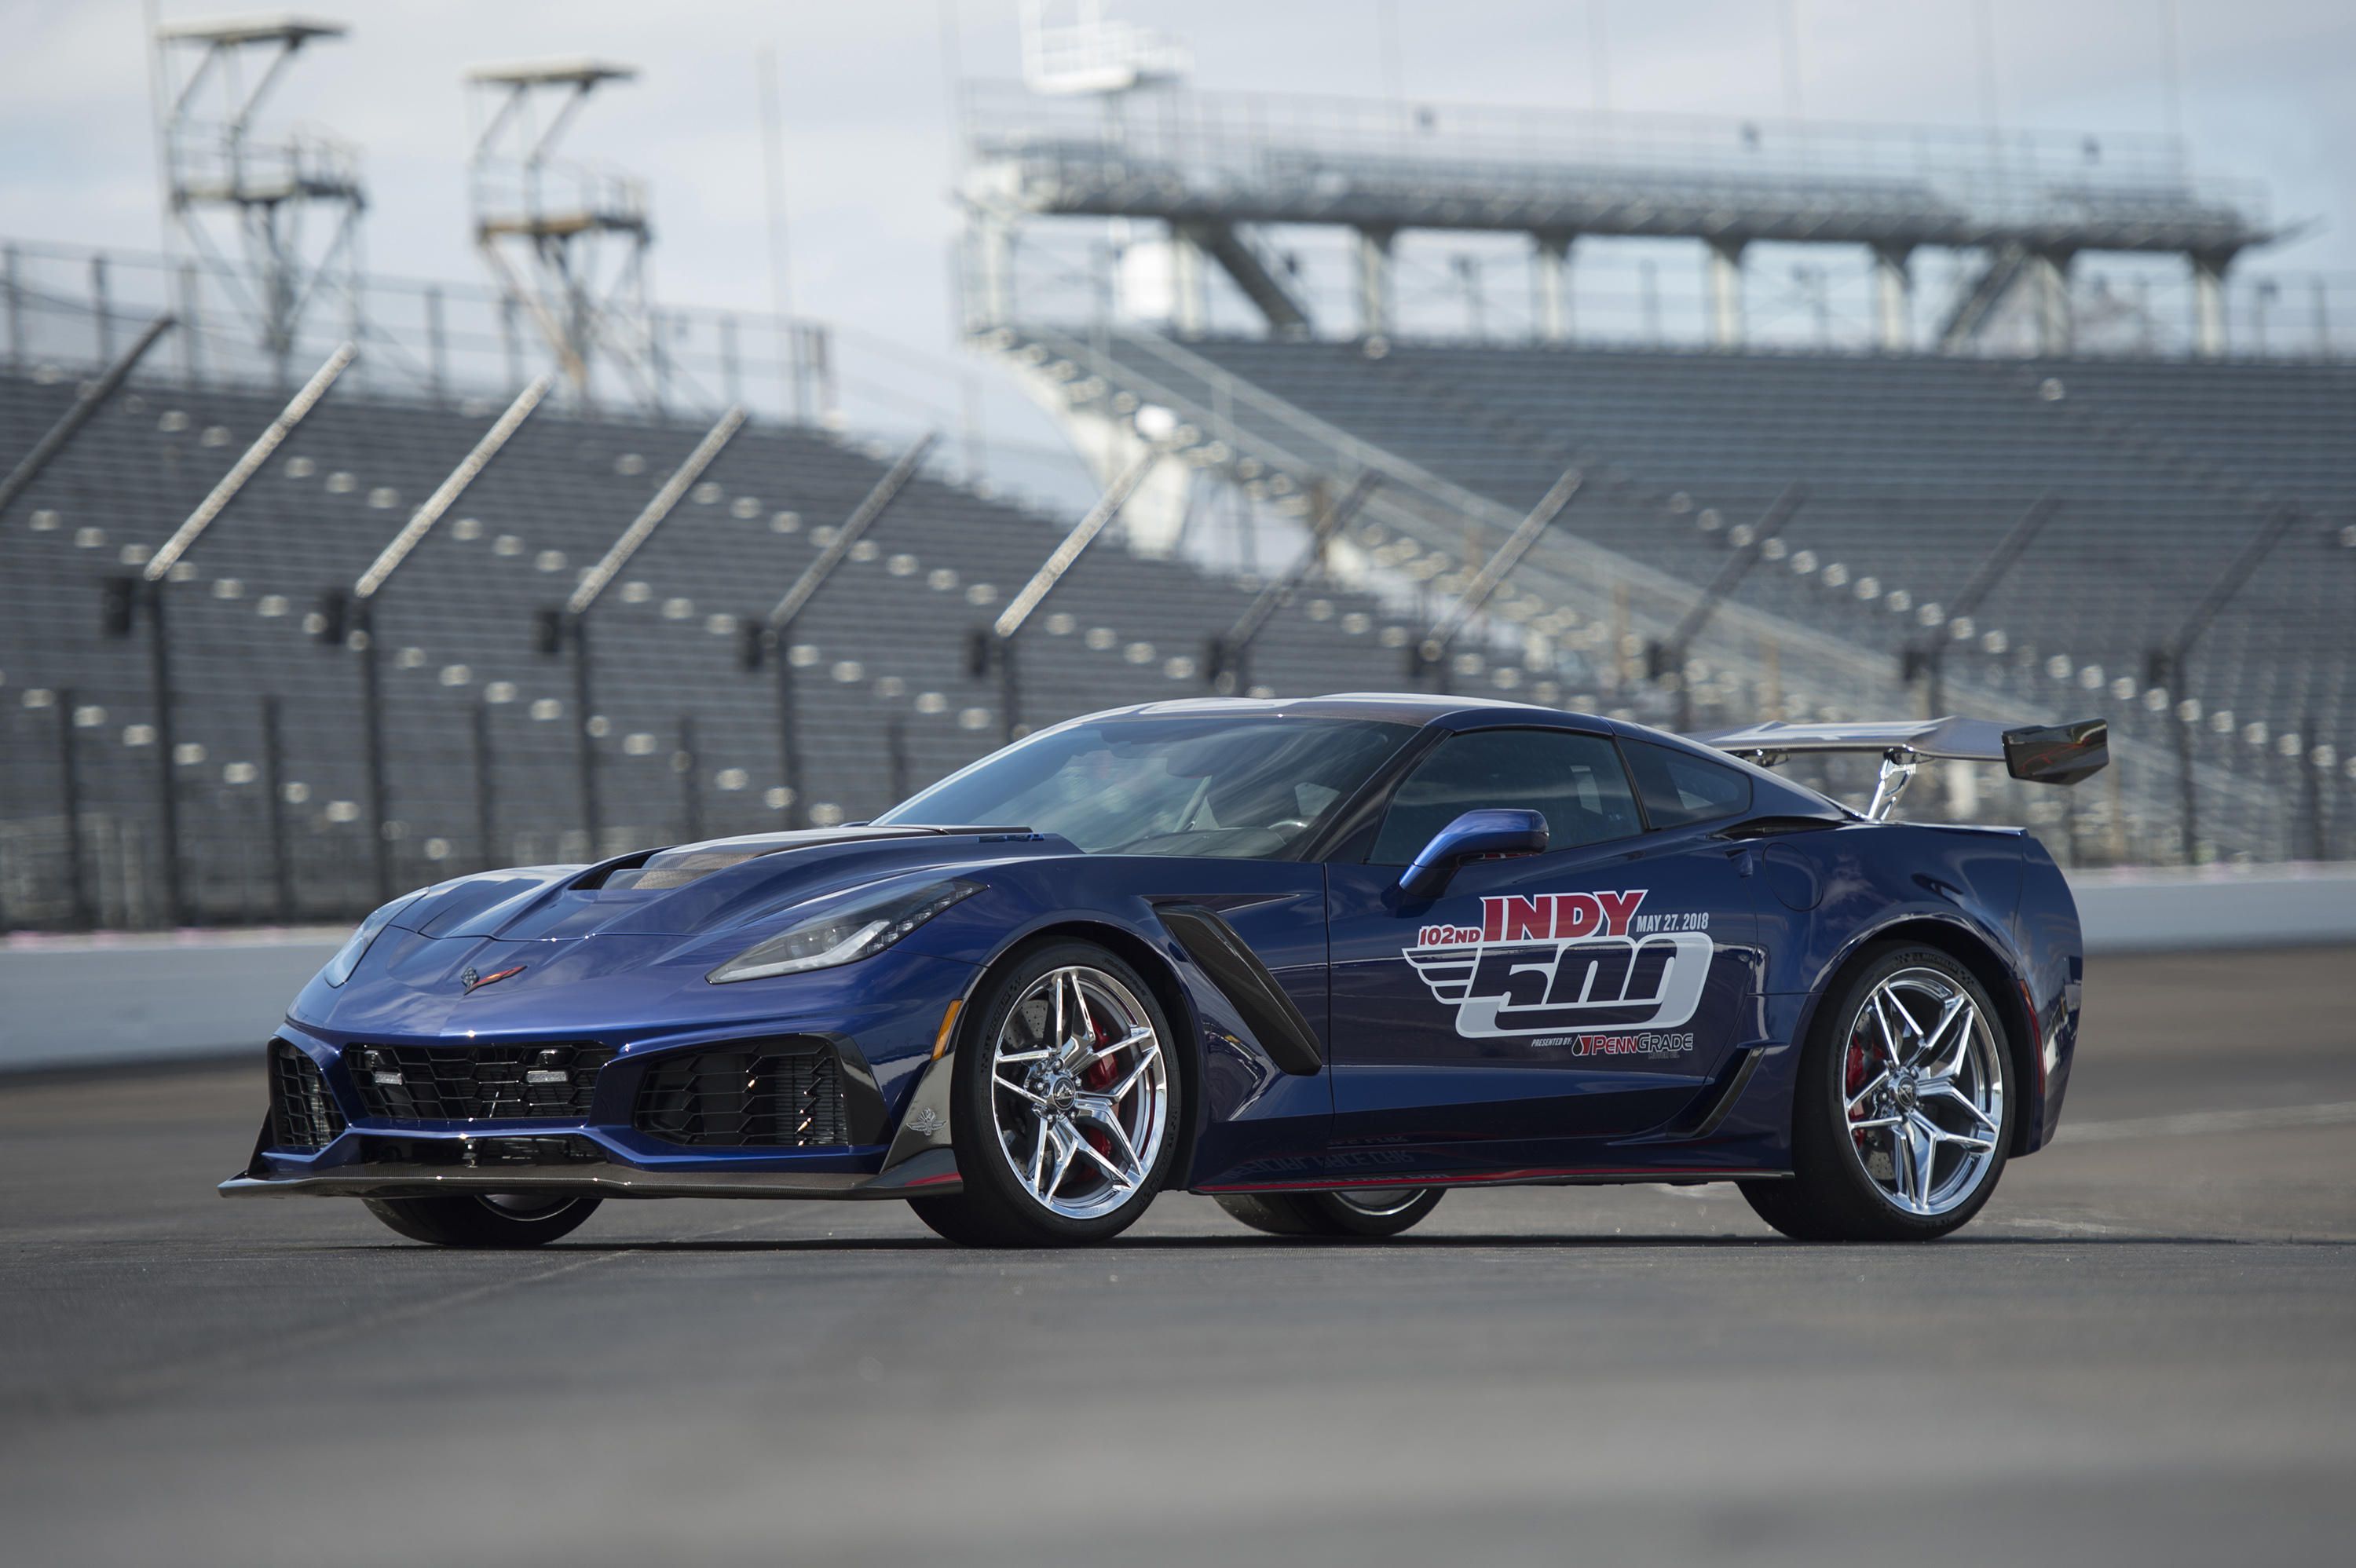 Chevy Corvette ZR1 is the 2018 Indy 500 pace car - Roadshow